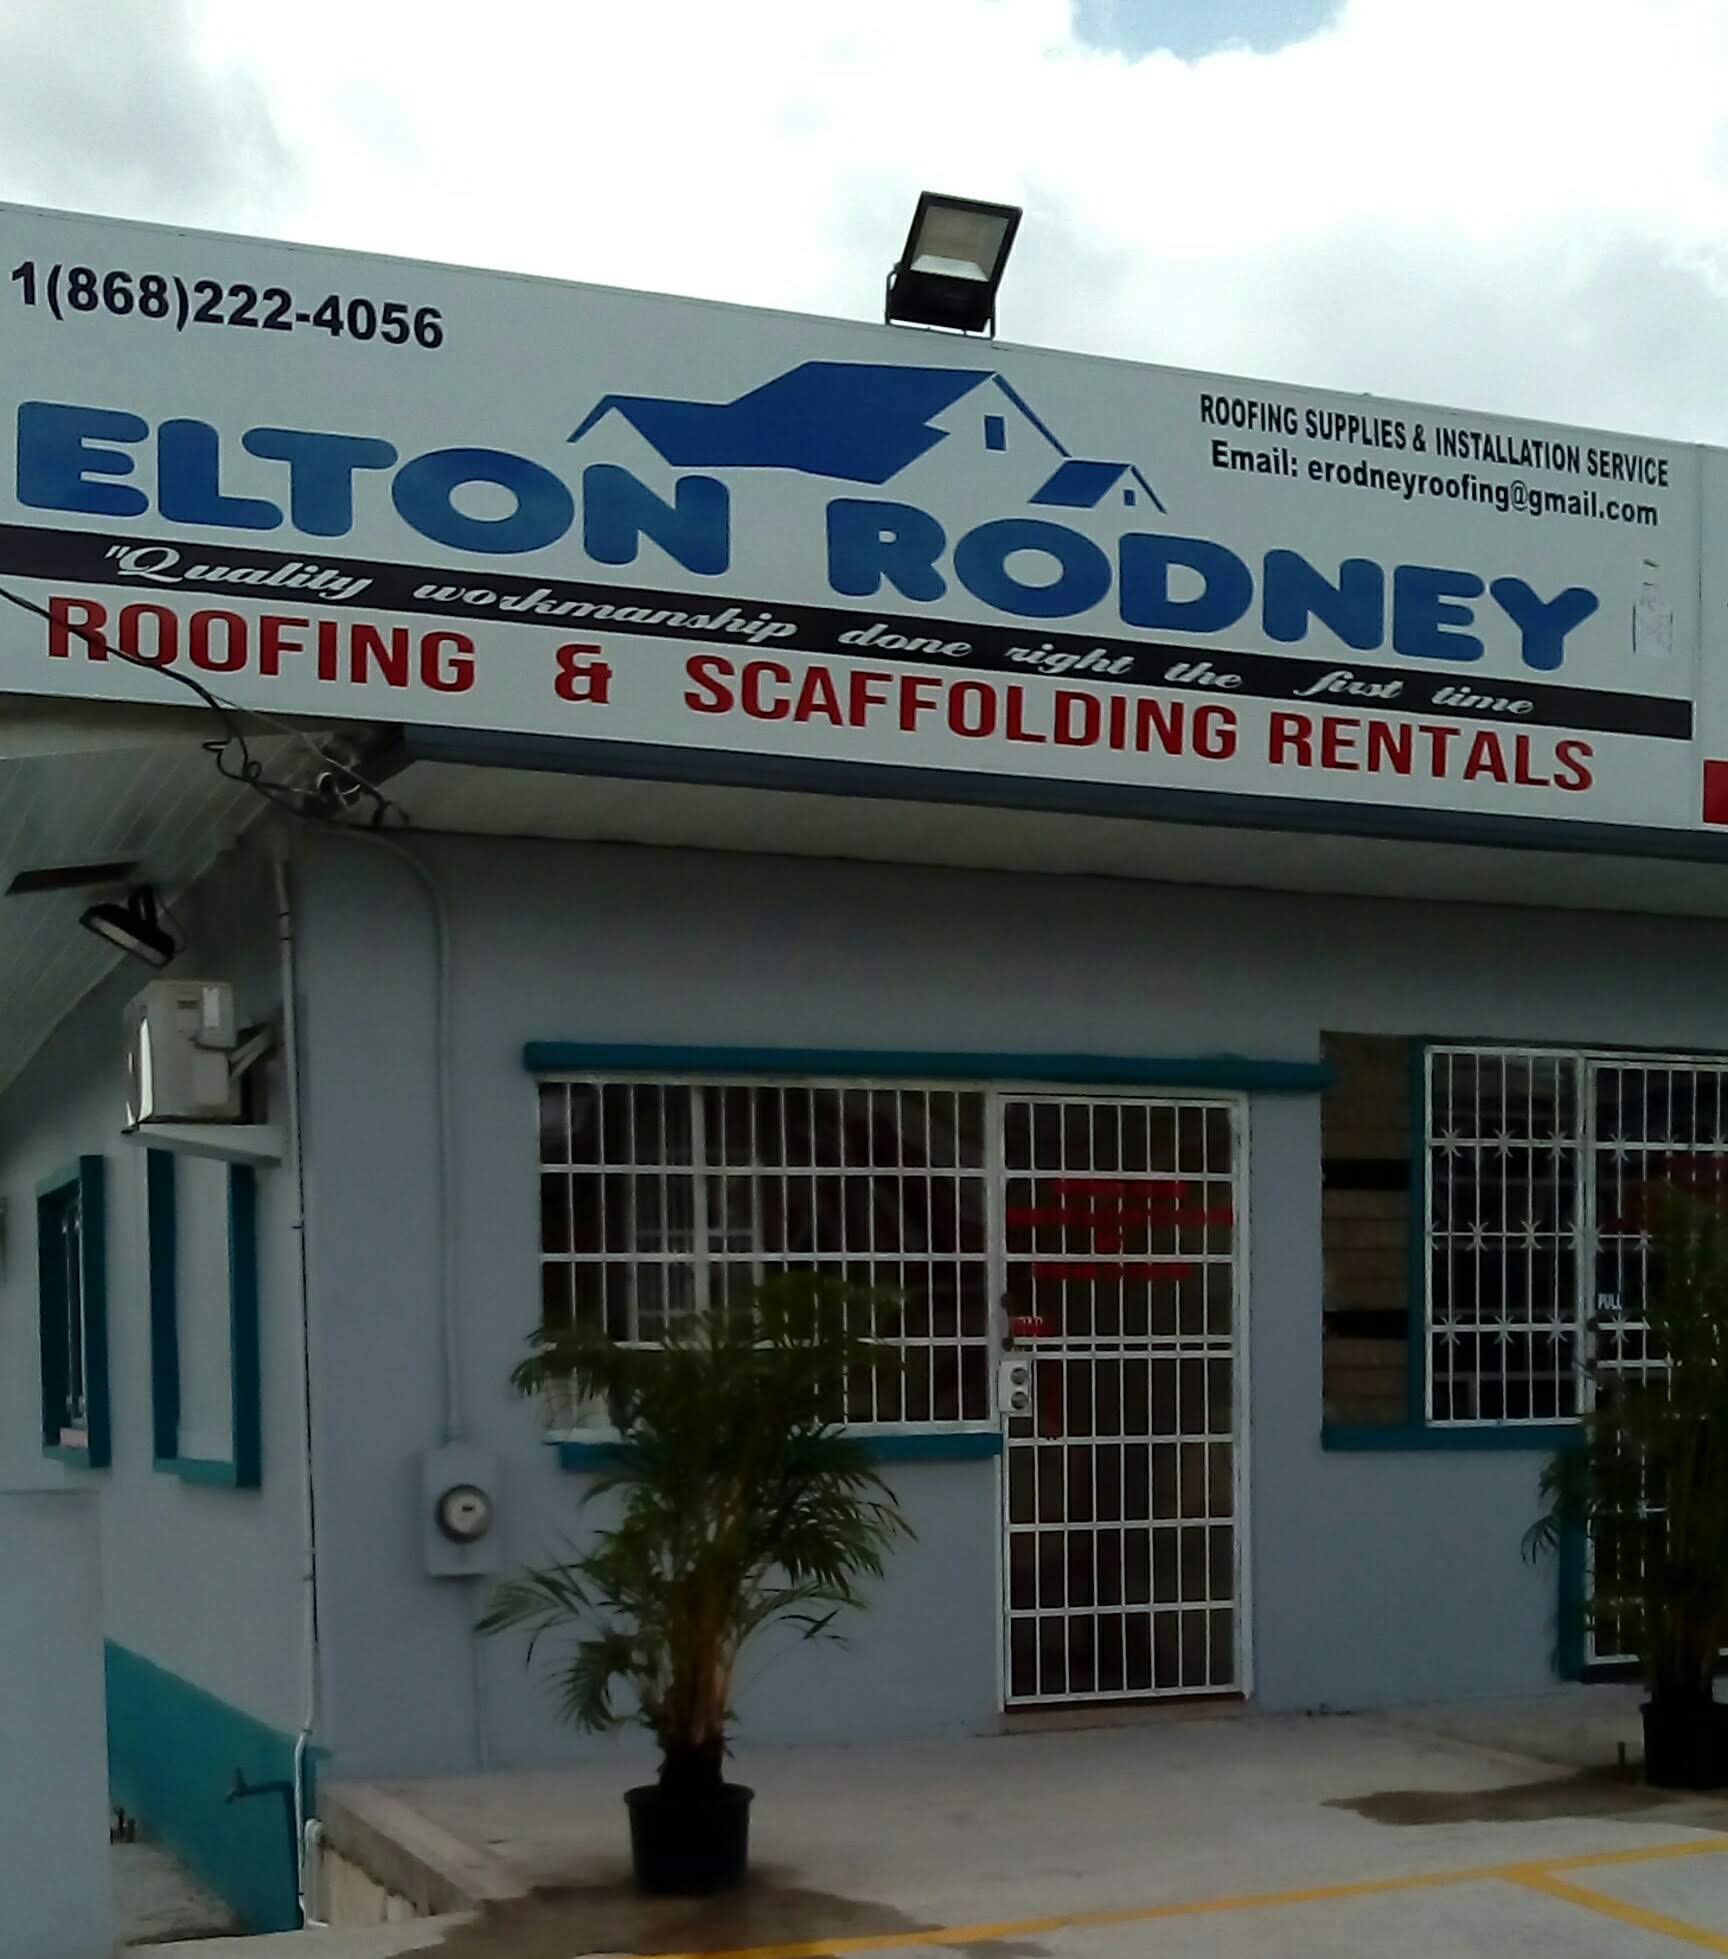 Elton Rodney Roofing & Scaffolding Rentals - SCAFFOLDING